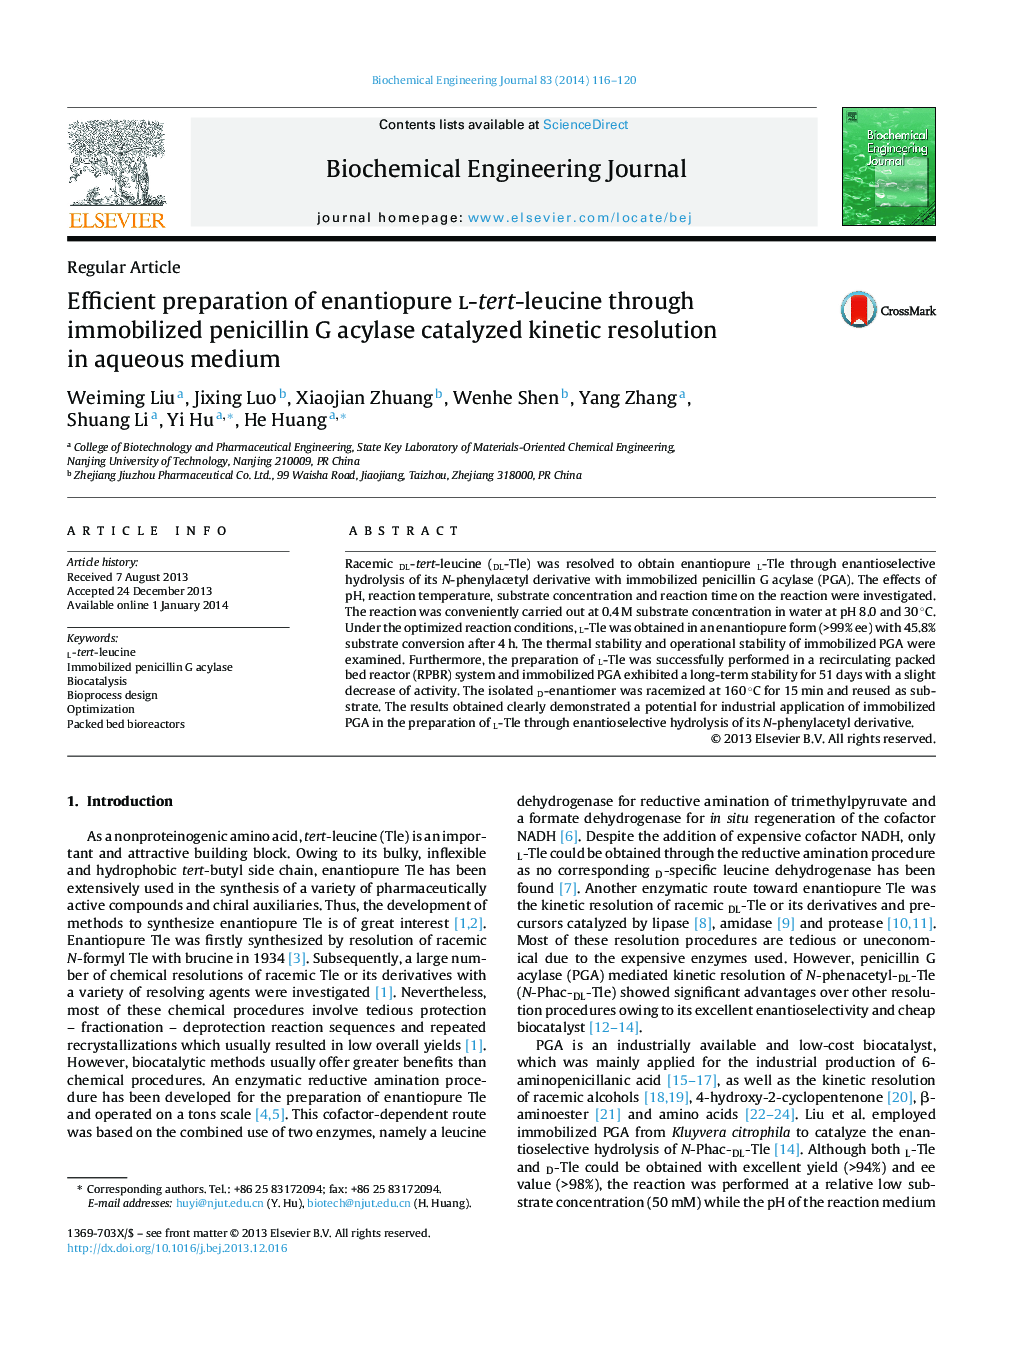 Efficient preparation of enantiopure l-tert-leucine through immobilized penicillin G acylase catalyzed kinetic resolution in aqueous medium